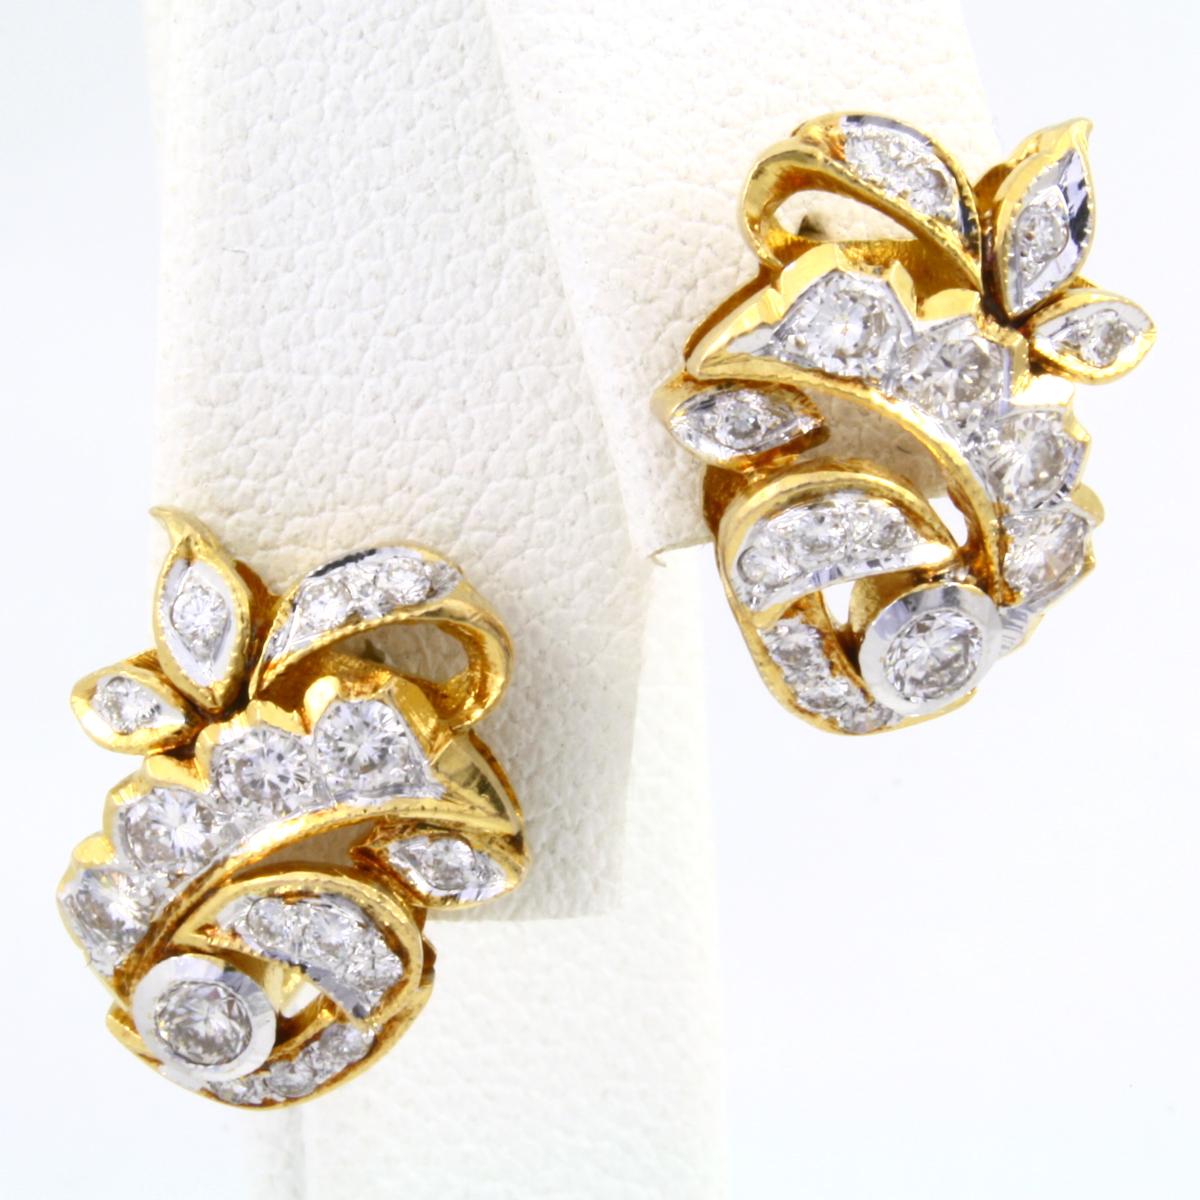 Pair of vintage unmarked 18K yellow gold diamond earrings